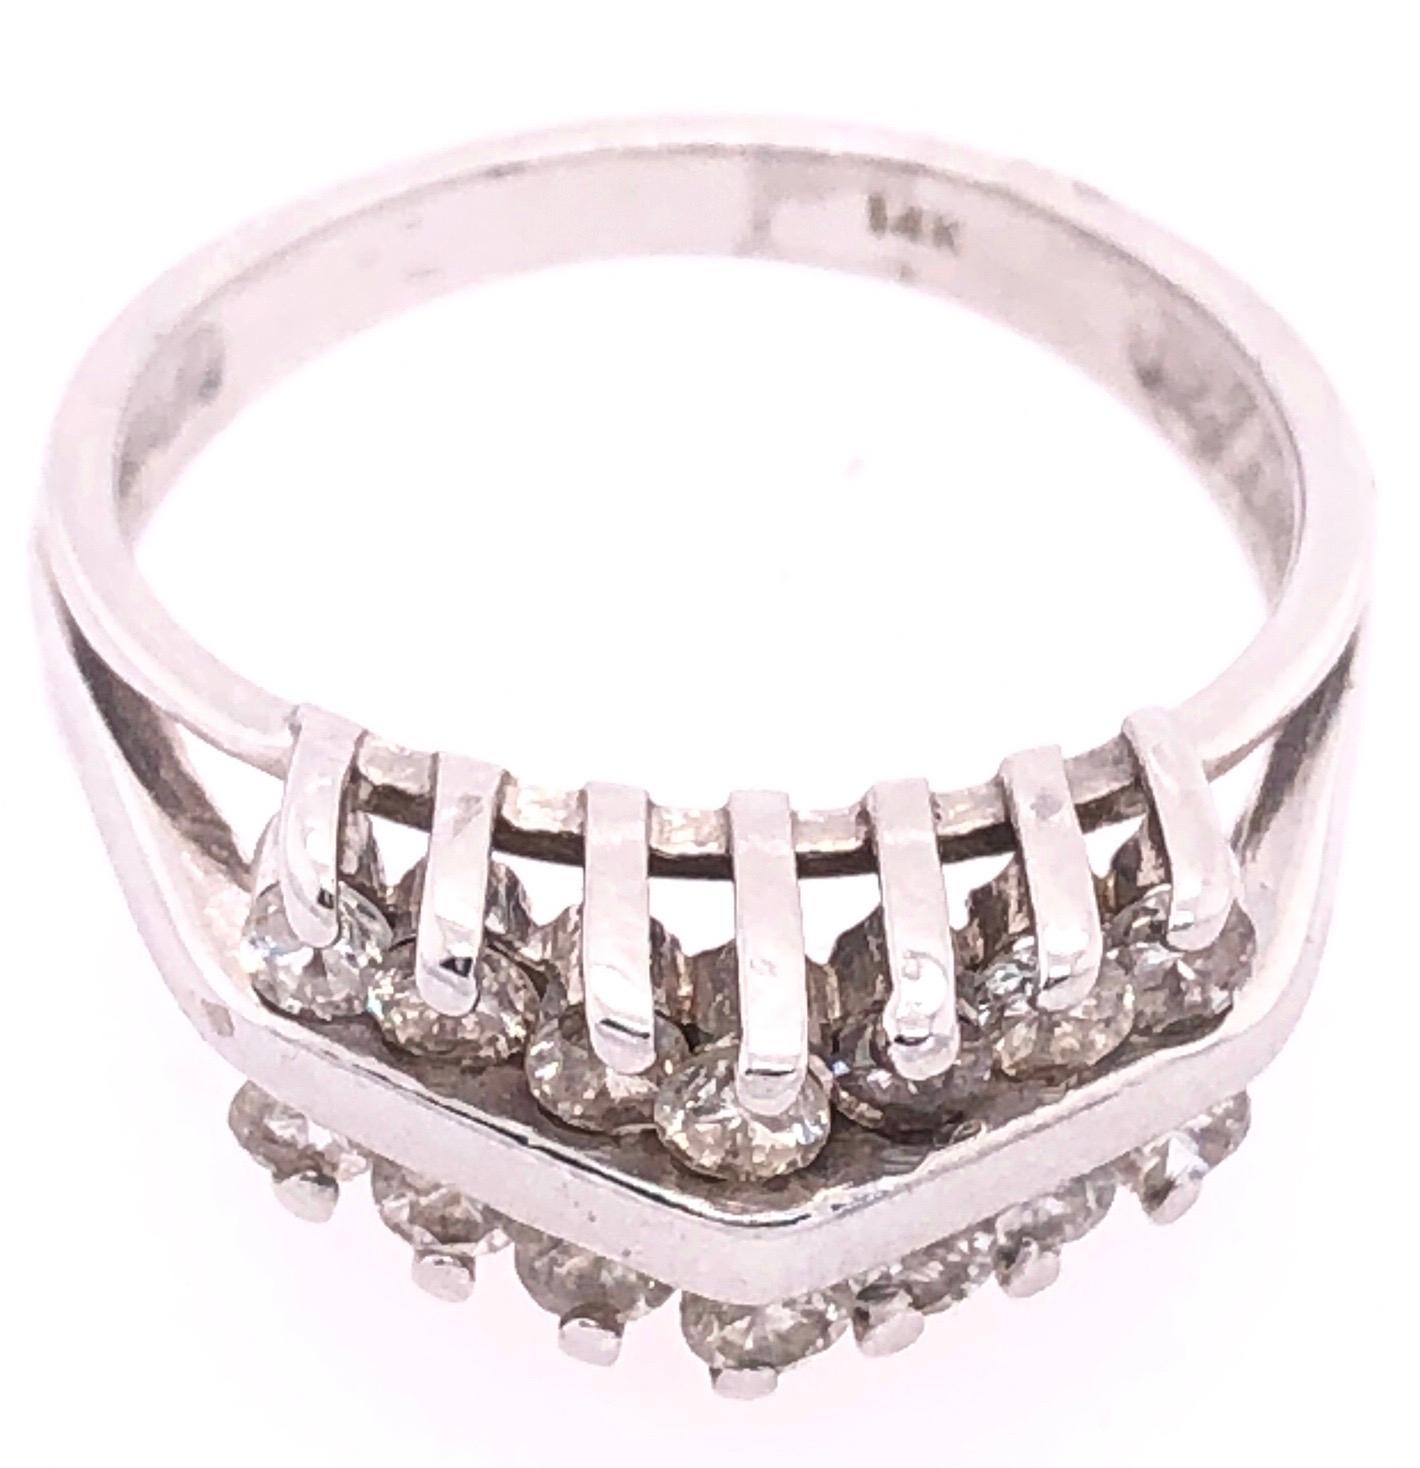 14 Karat White Gold Diamond Ring Wedding / Bridal / Anniversary
0.75 total diamond weight.
Size 6
3.43 grams total weight.